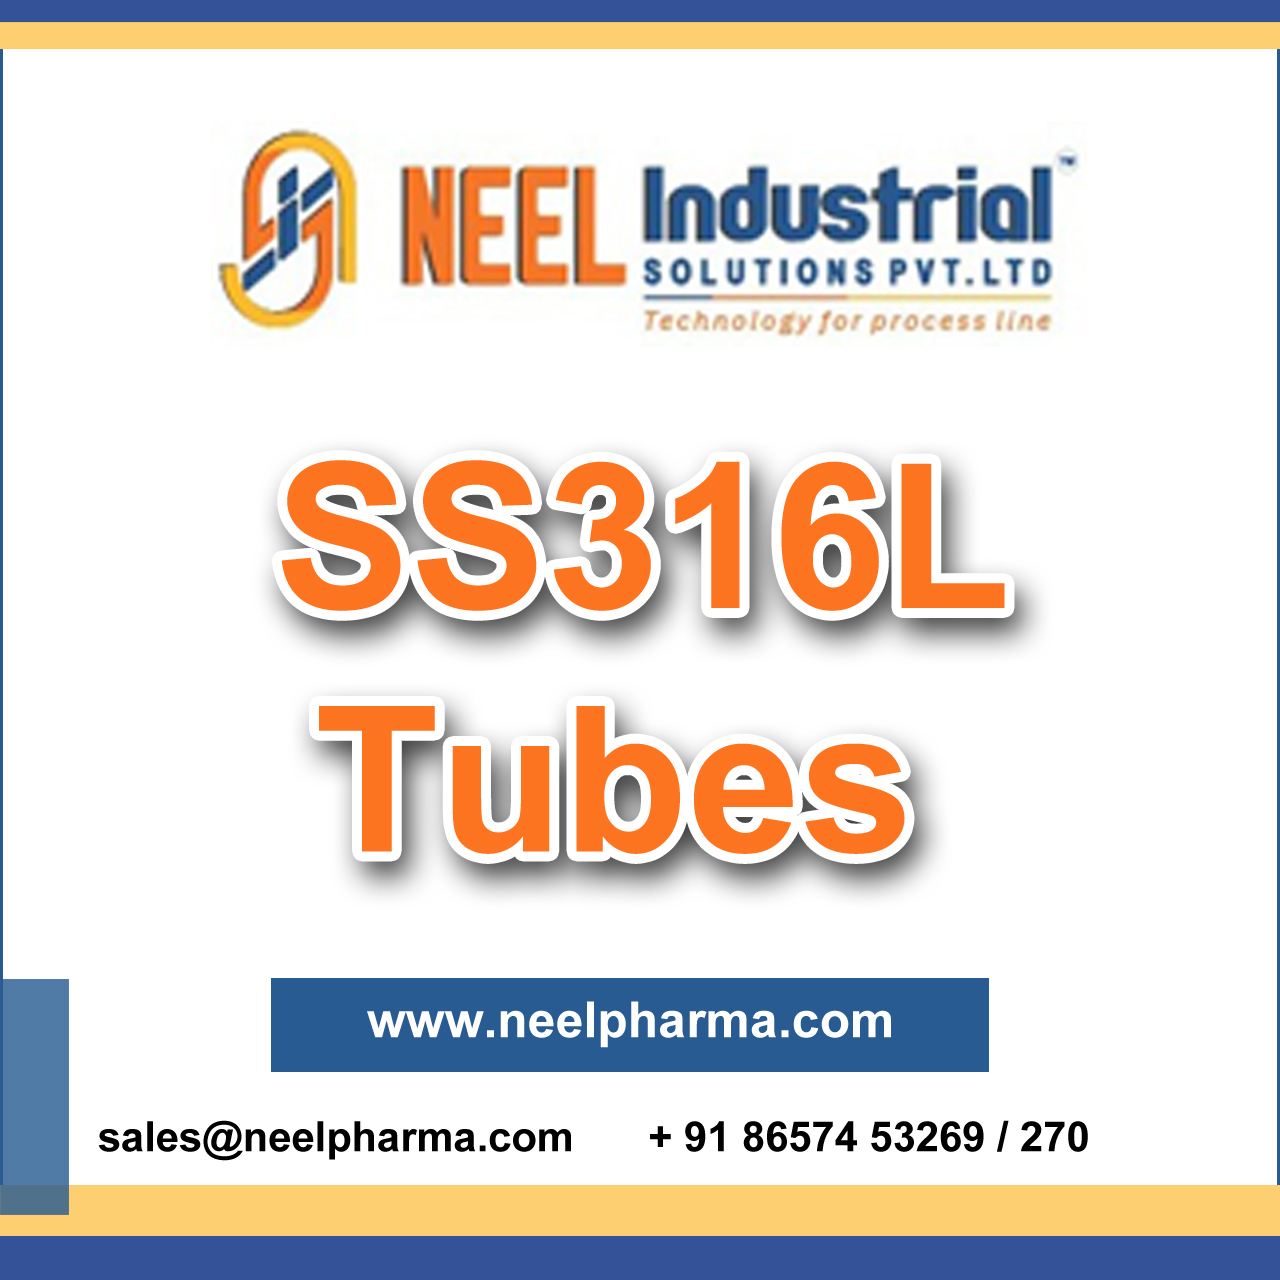 Neel Industrial Solutions Pvt. Ltd - SS316L Tubes